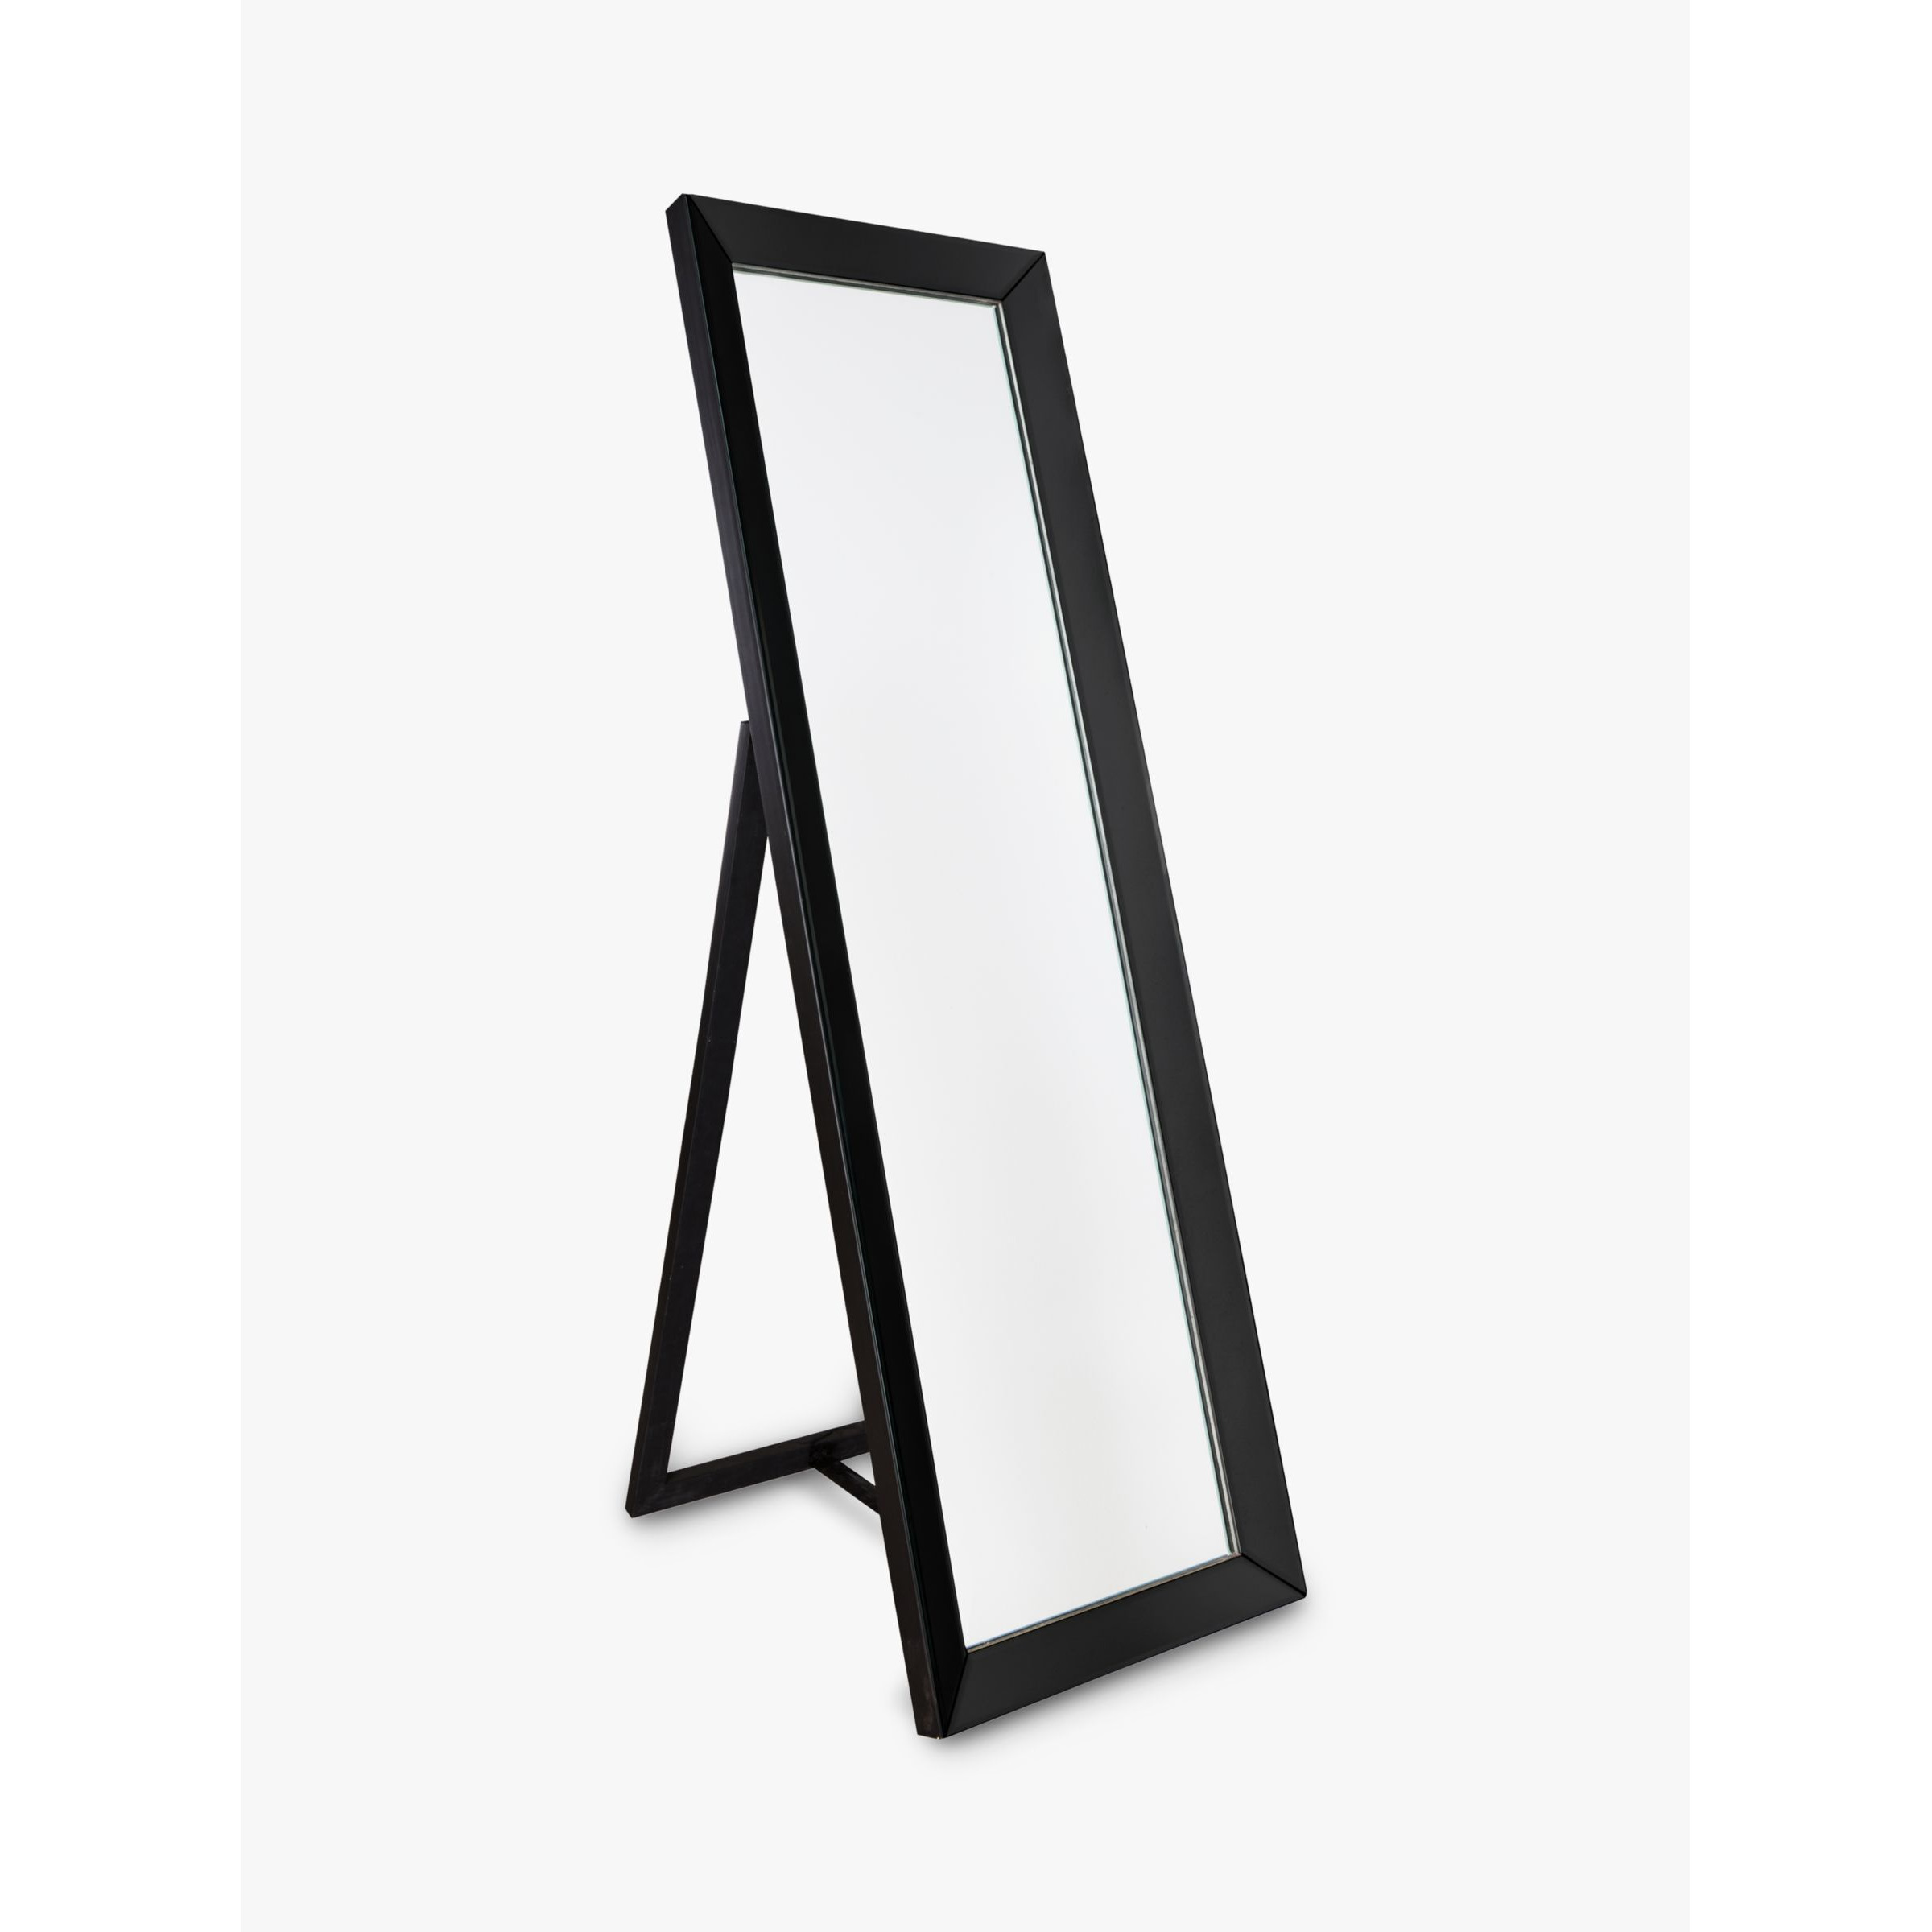 Gallery Direct Melanie Cheval Freestanding Mirror, 155 x 48cm - image 1